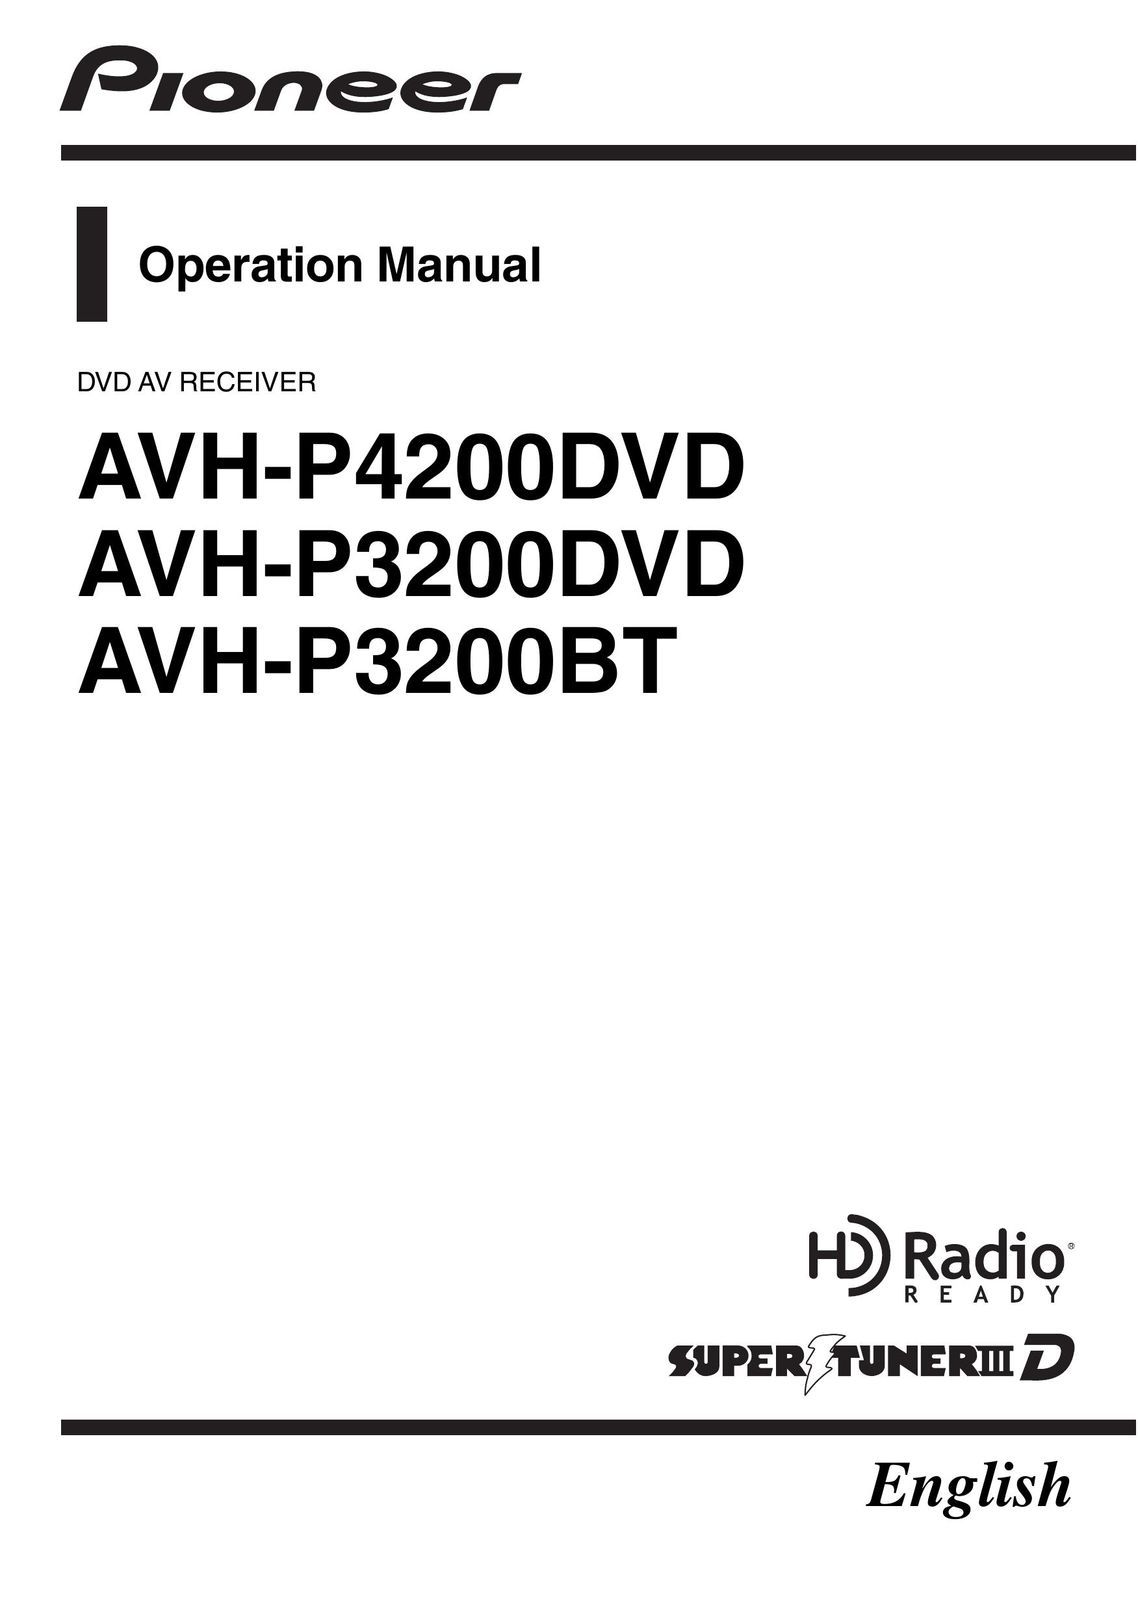 Pioneer AVH-P3200BT Car Video System User Manual